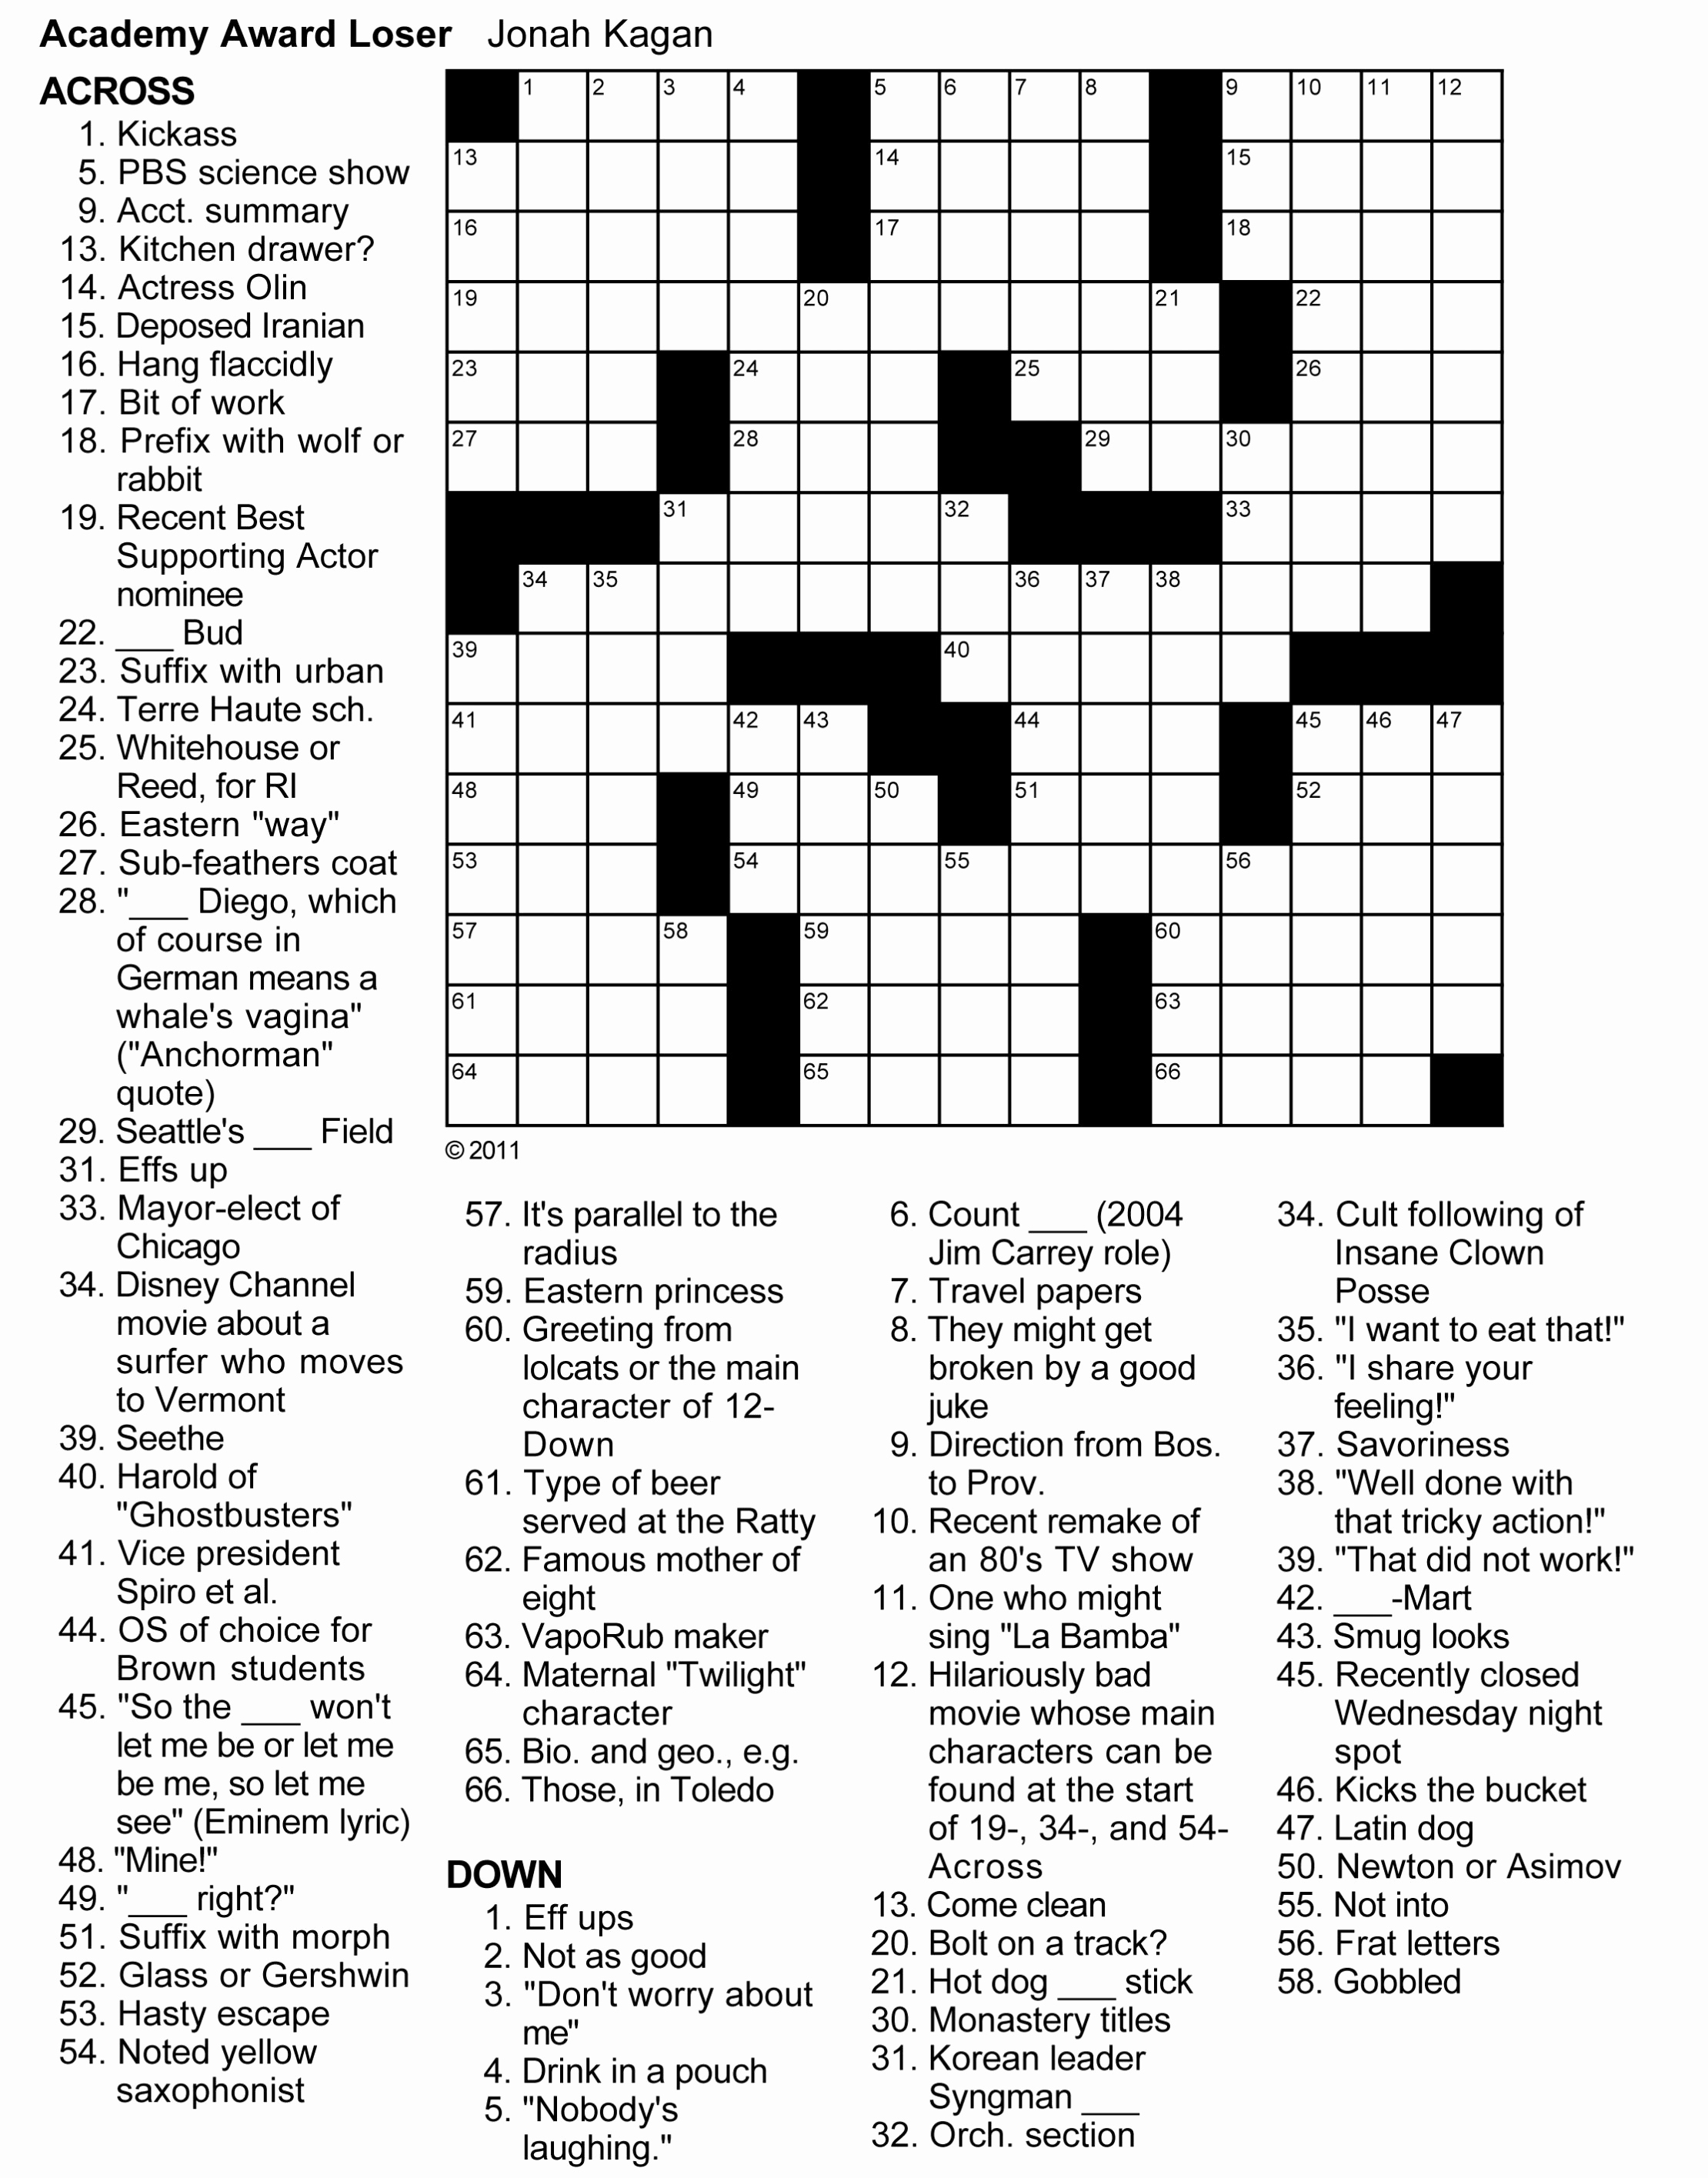 choosy crossword clue